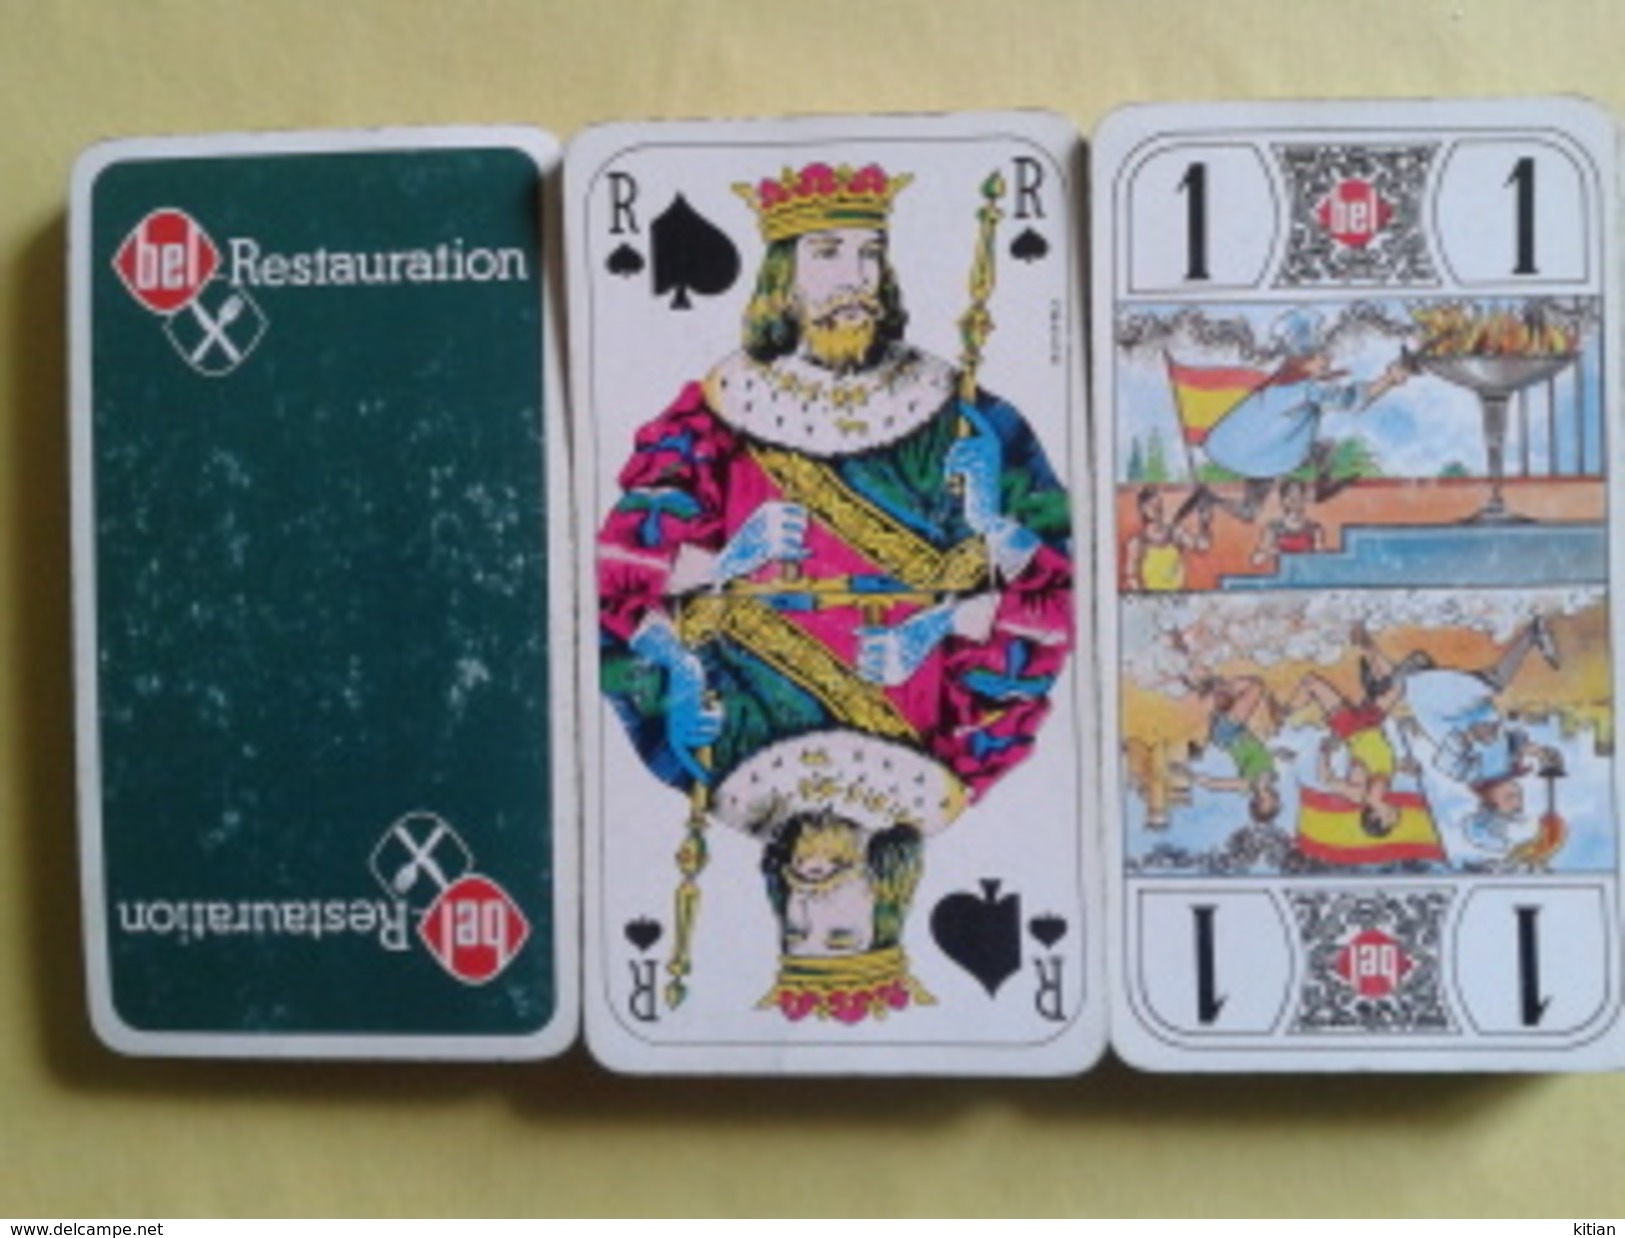 Jeu De Tarot. BEL Restauration - Cartes à Jouer Classiques